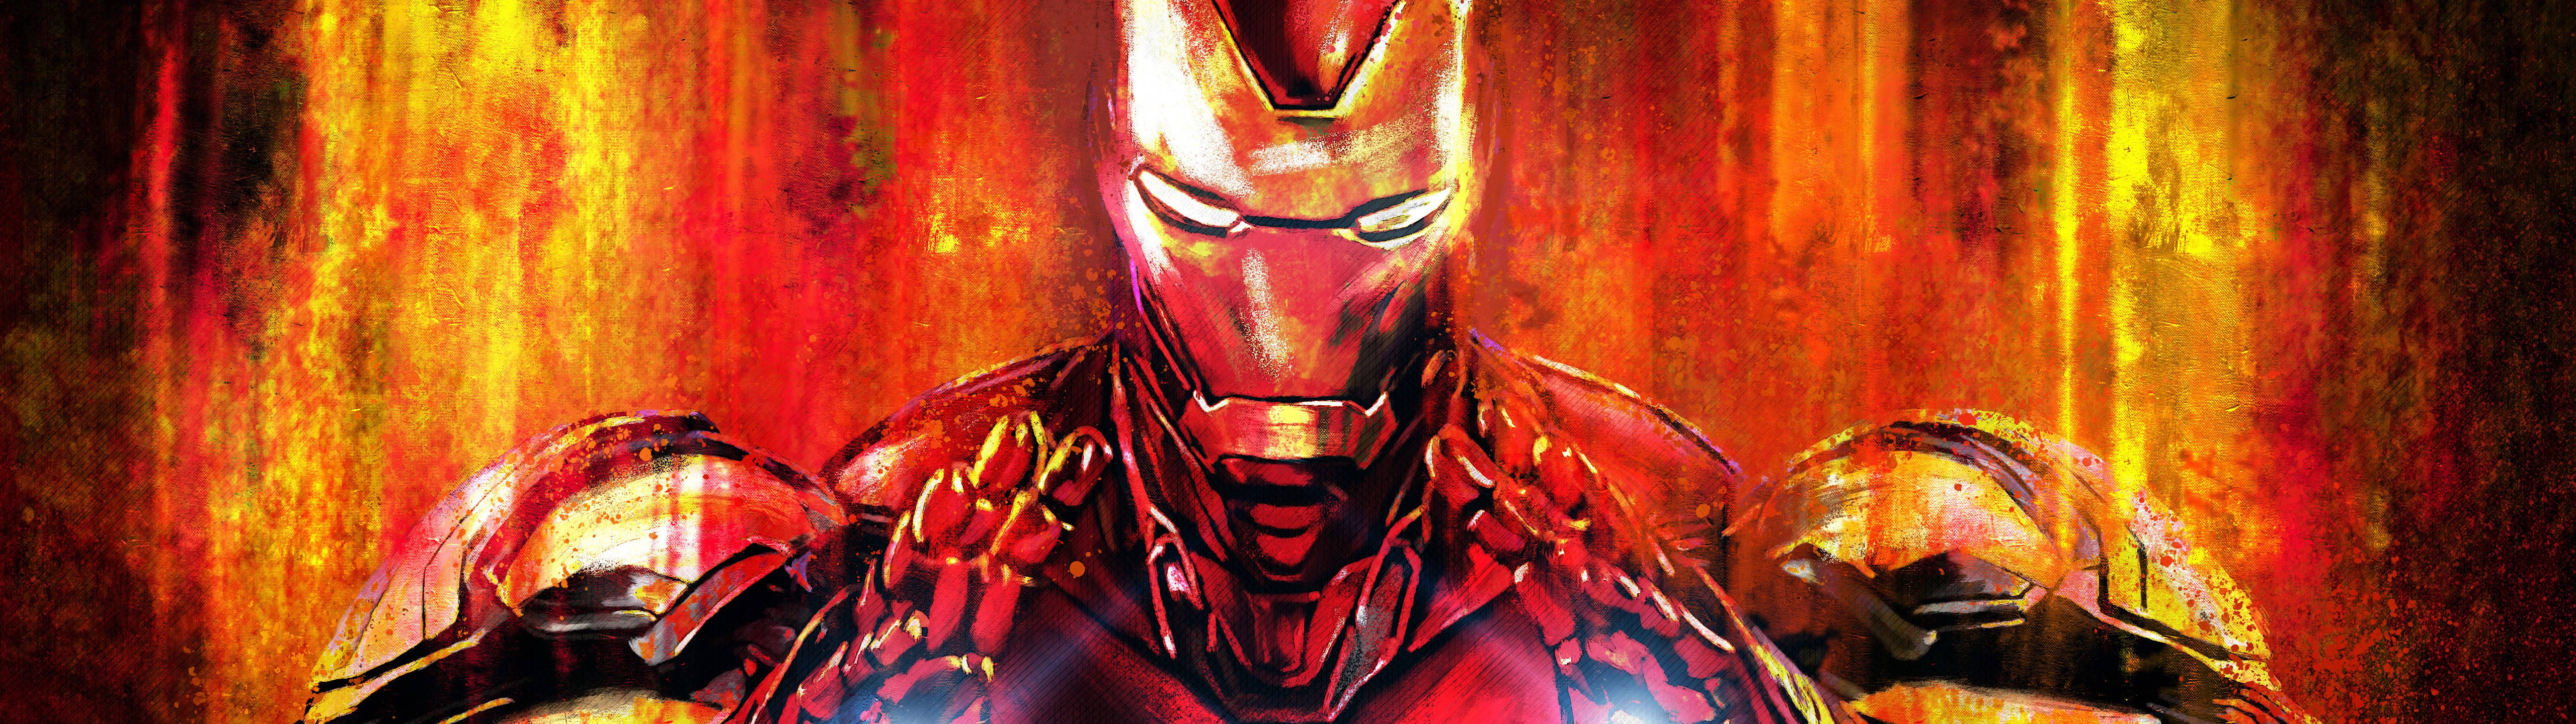 Marvel's Ironman Art 5120 X 1440 Background